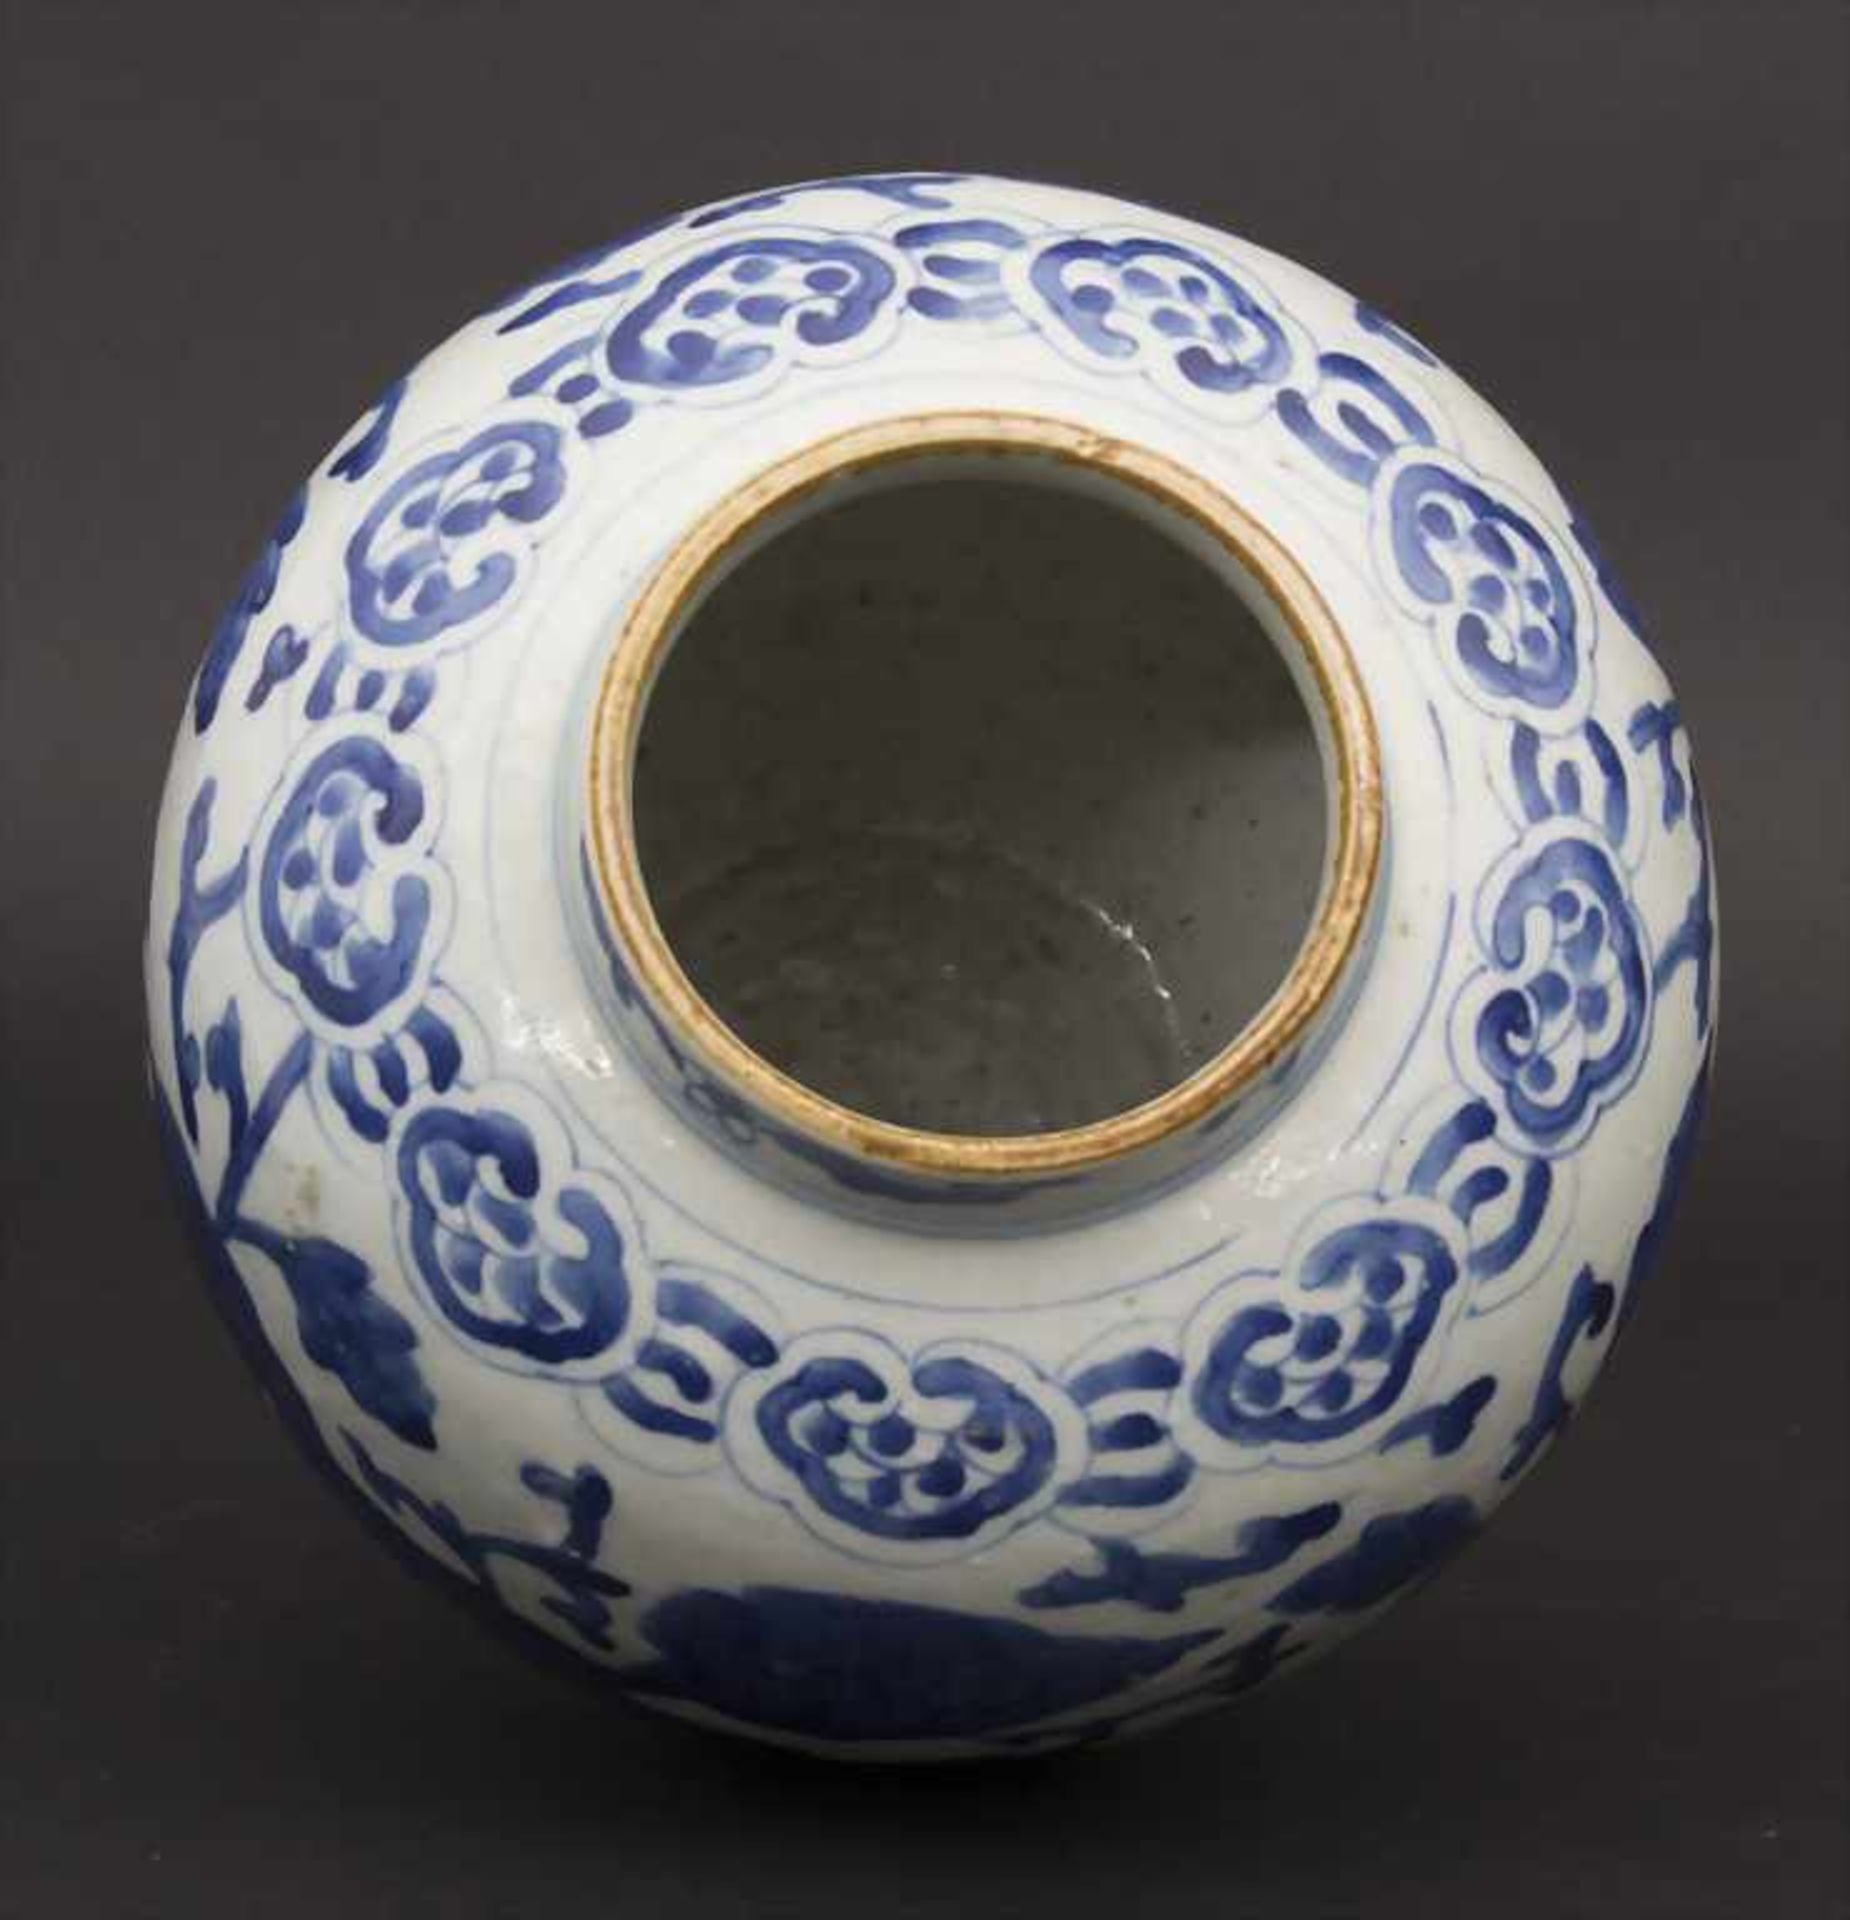 Schultertopf mit unterglasurblauer Malerei, Qing Dynastie, China, 18./19. Jh. - Image 6 of 11